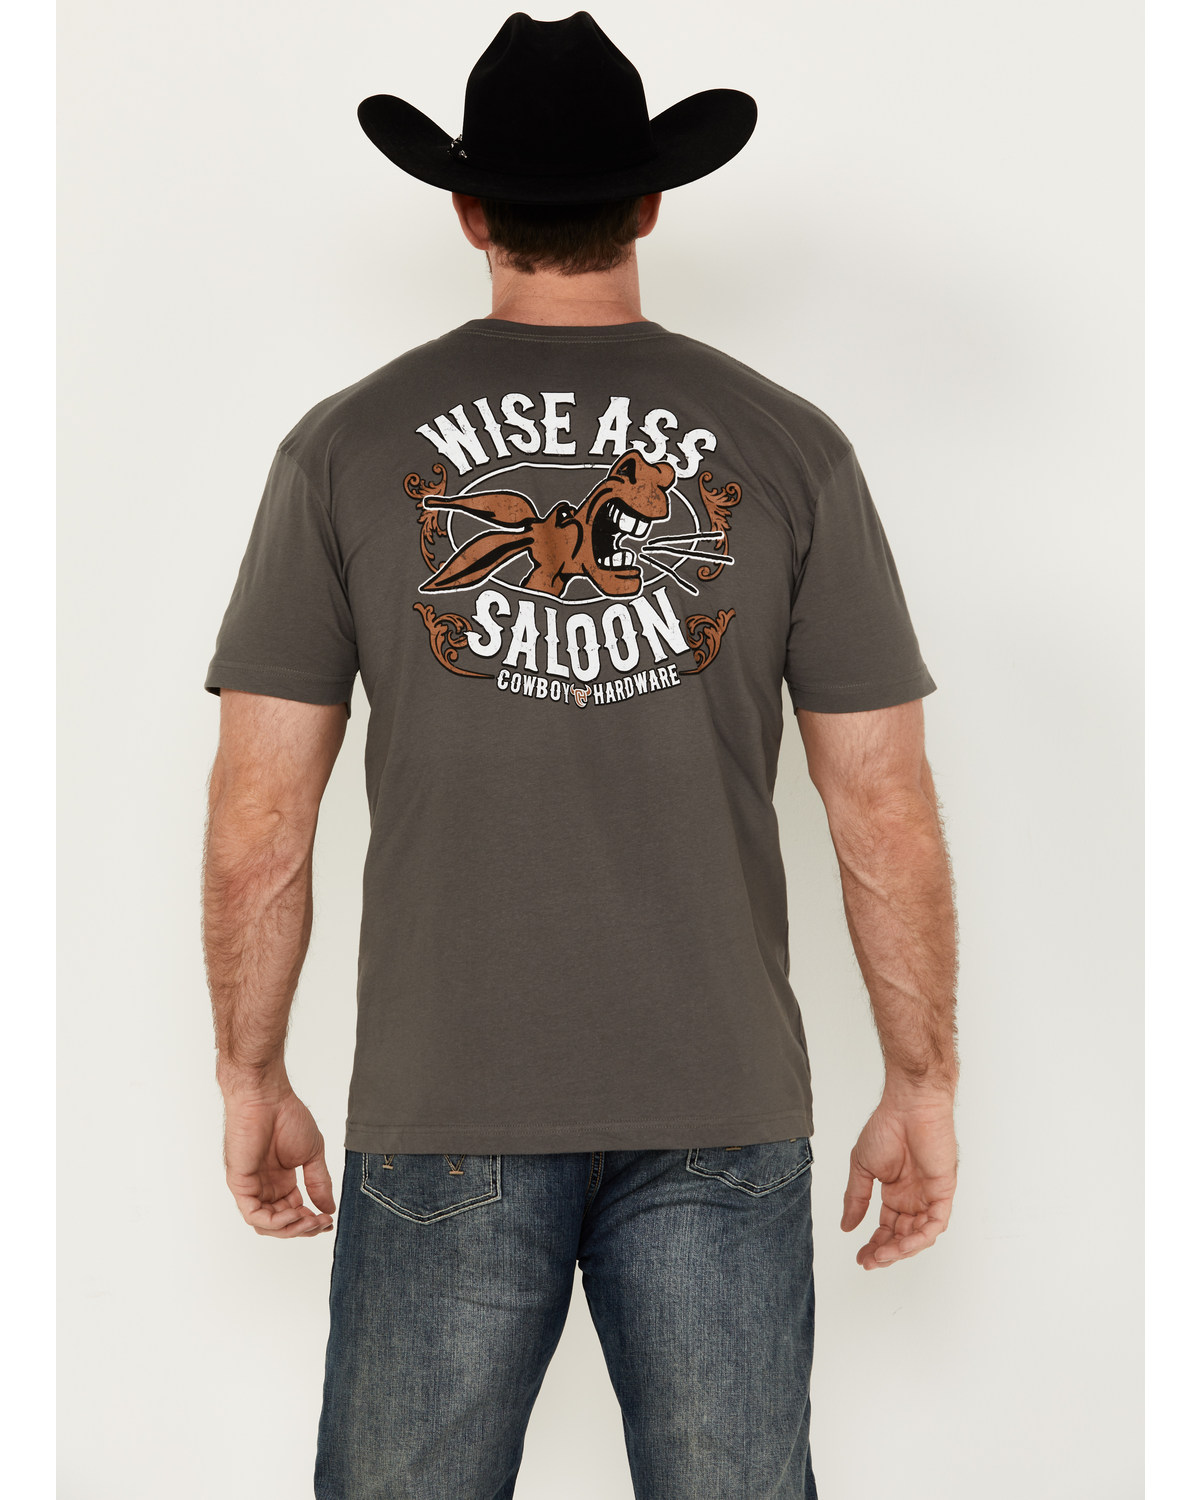 Cowboy Hardware Men's Wise Ass Saloon Short Sleeve Graphic T-Shirt